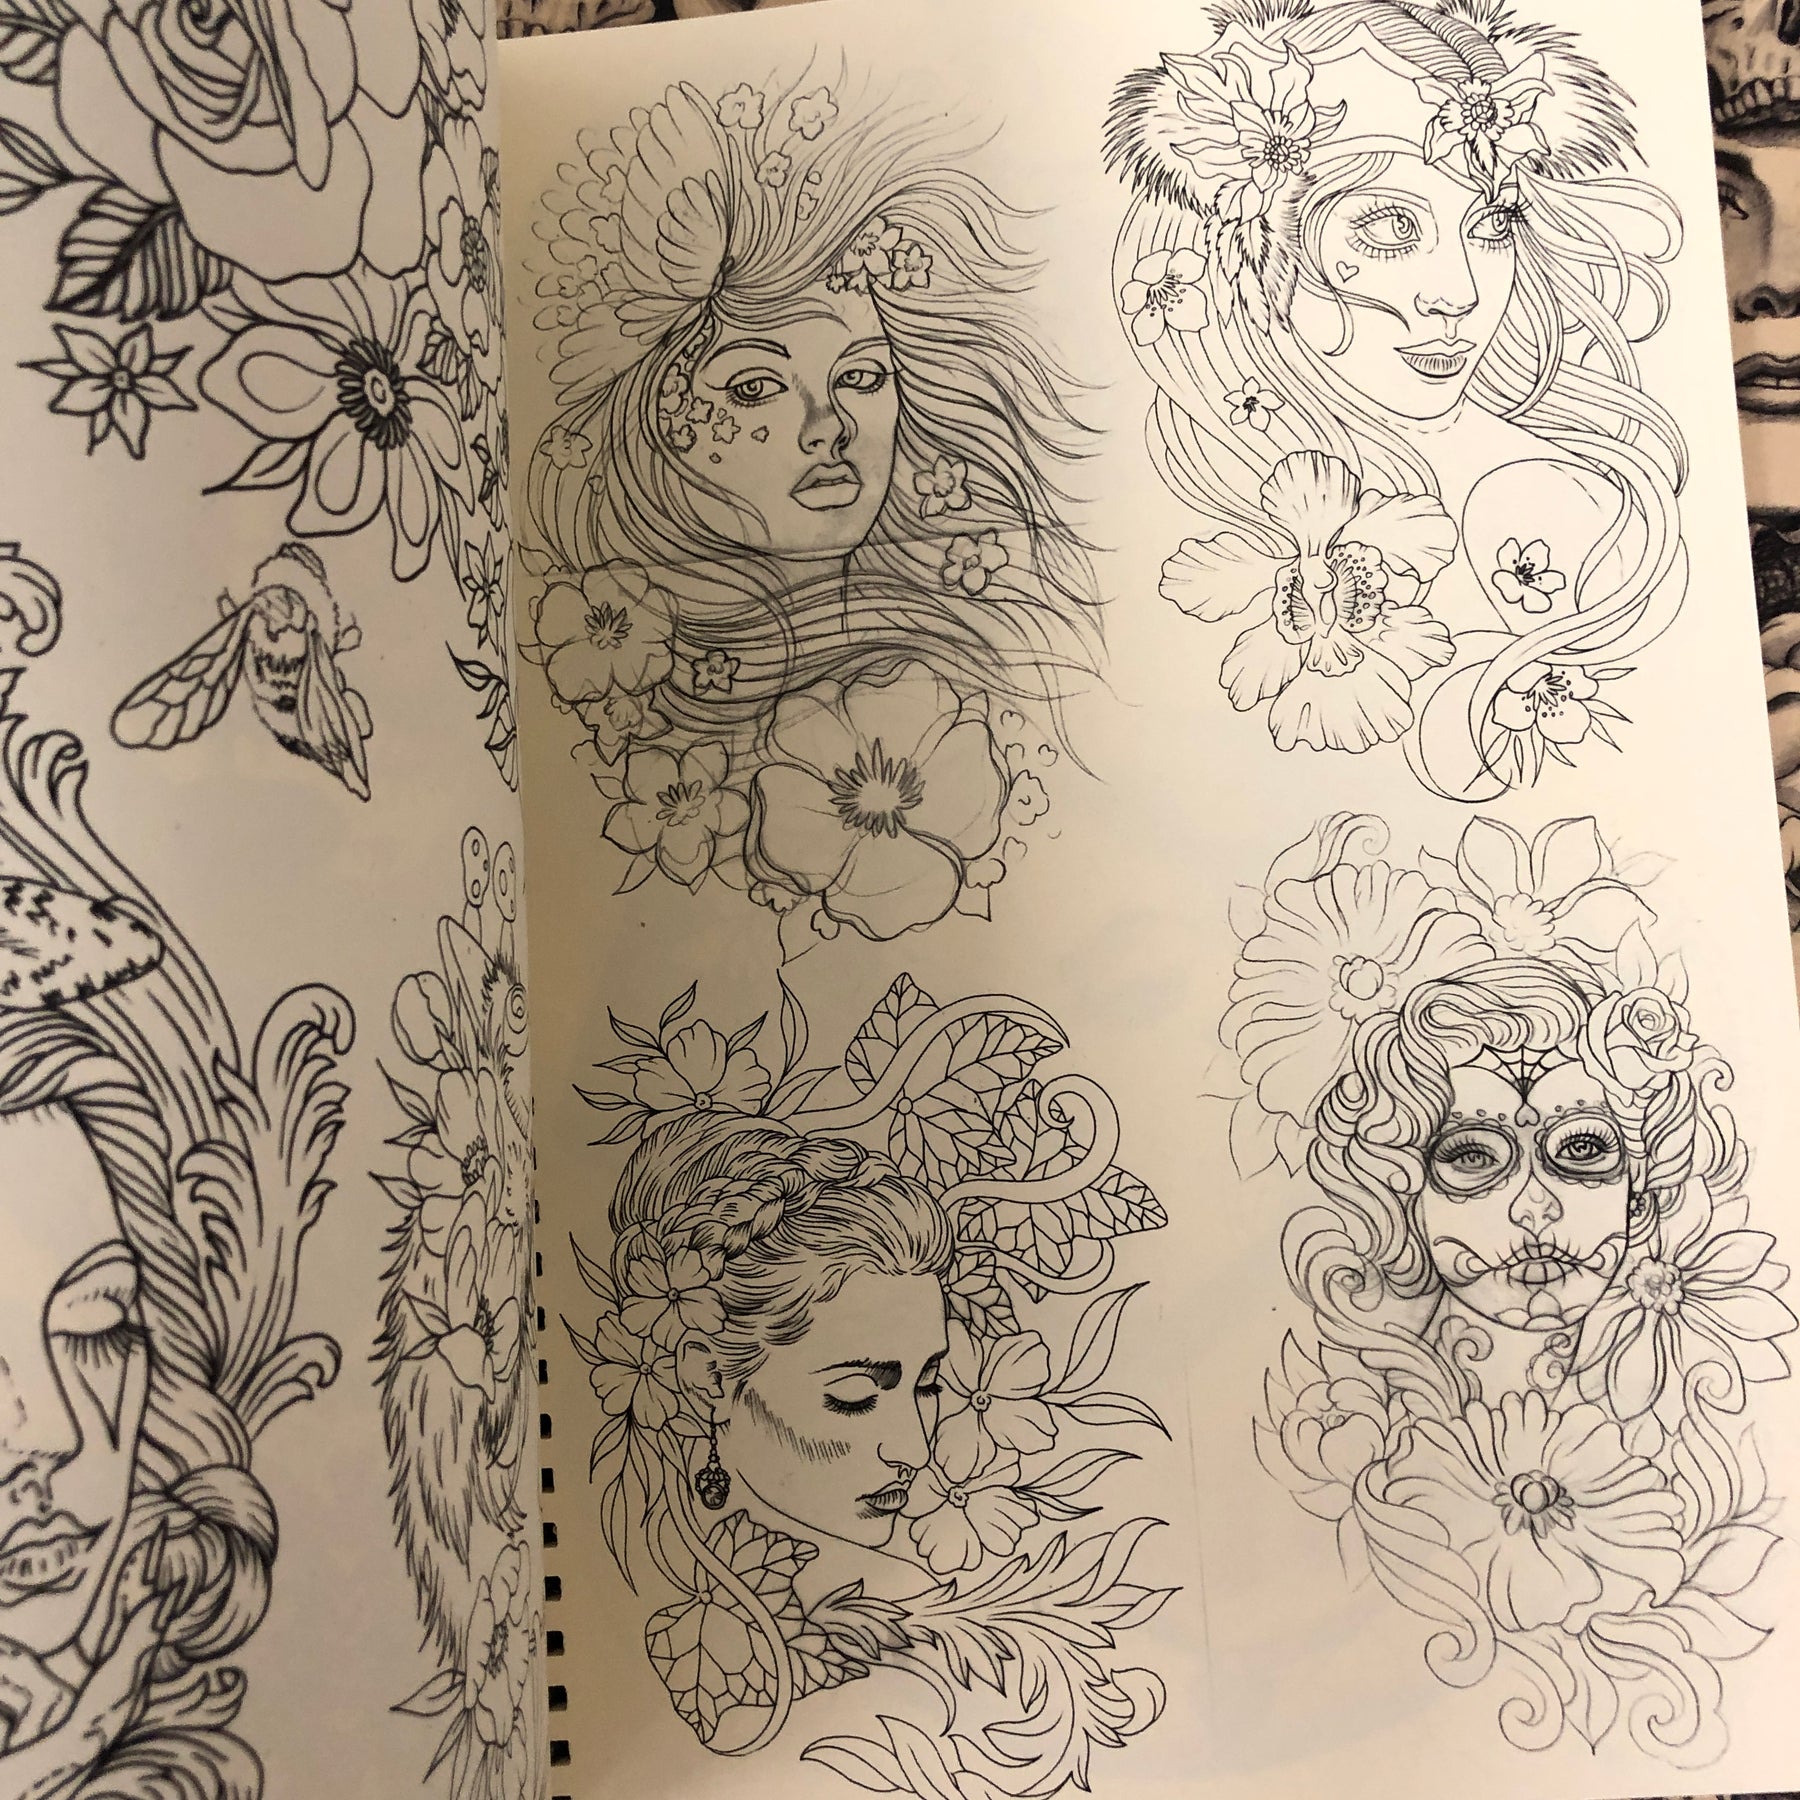 Miss Juliet Tattoo Sketchbook